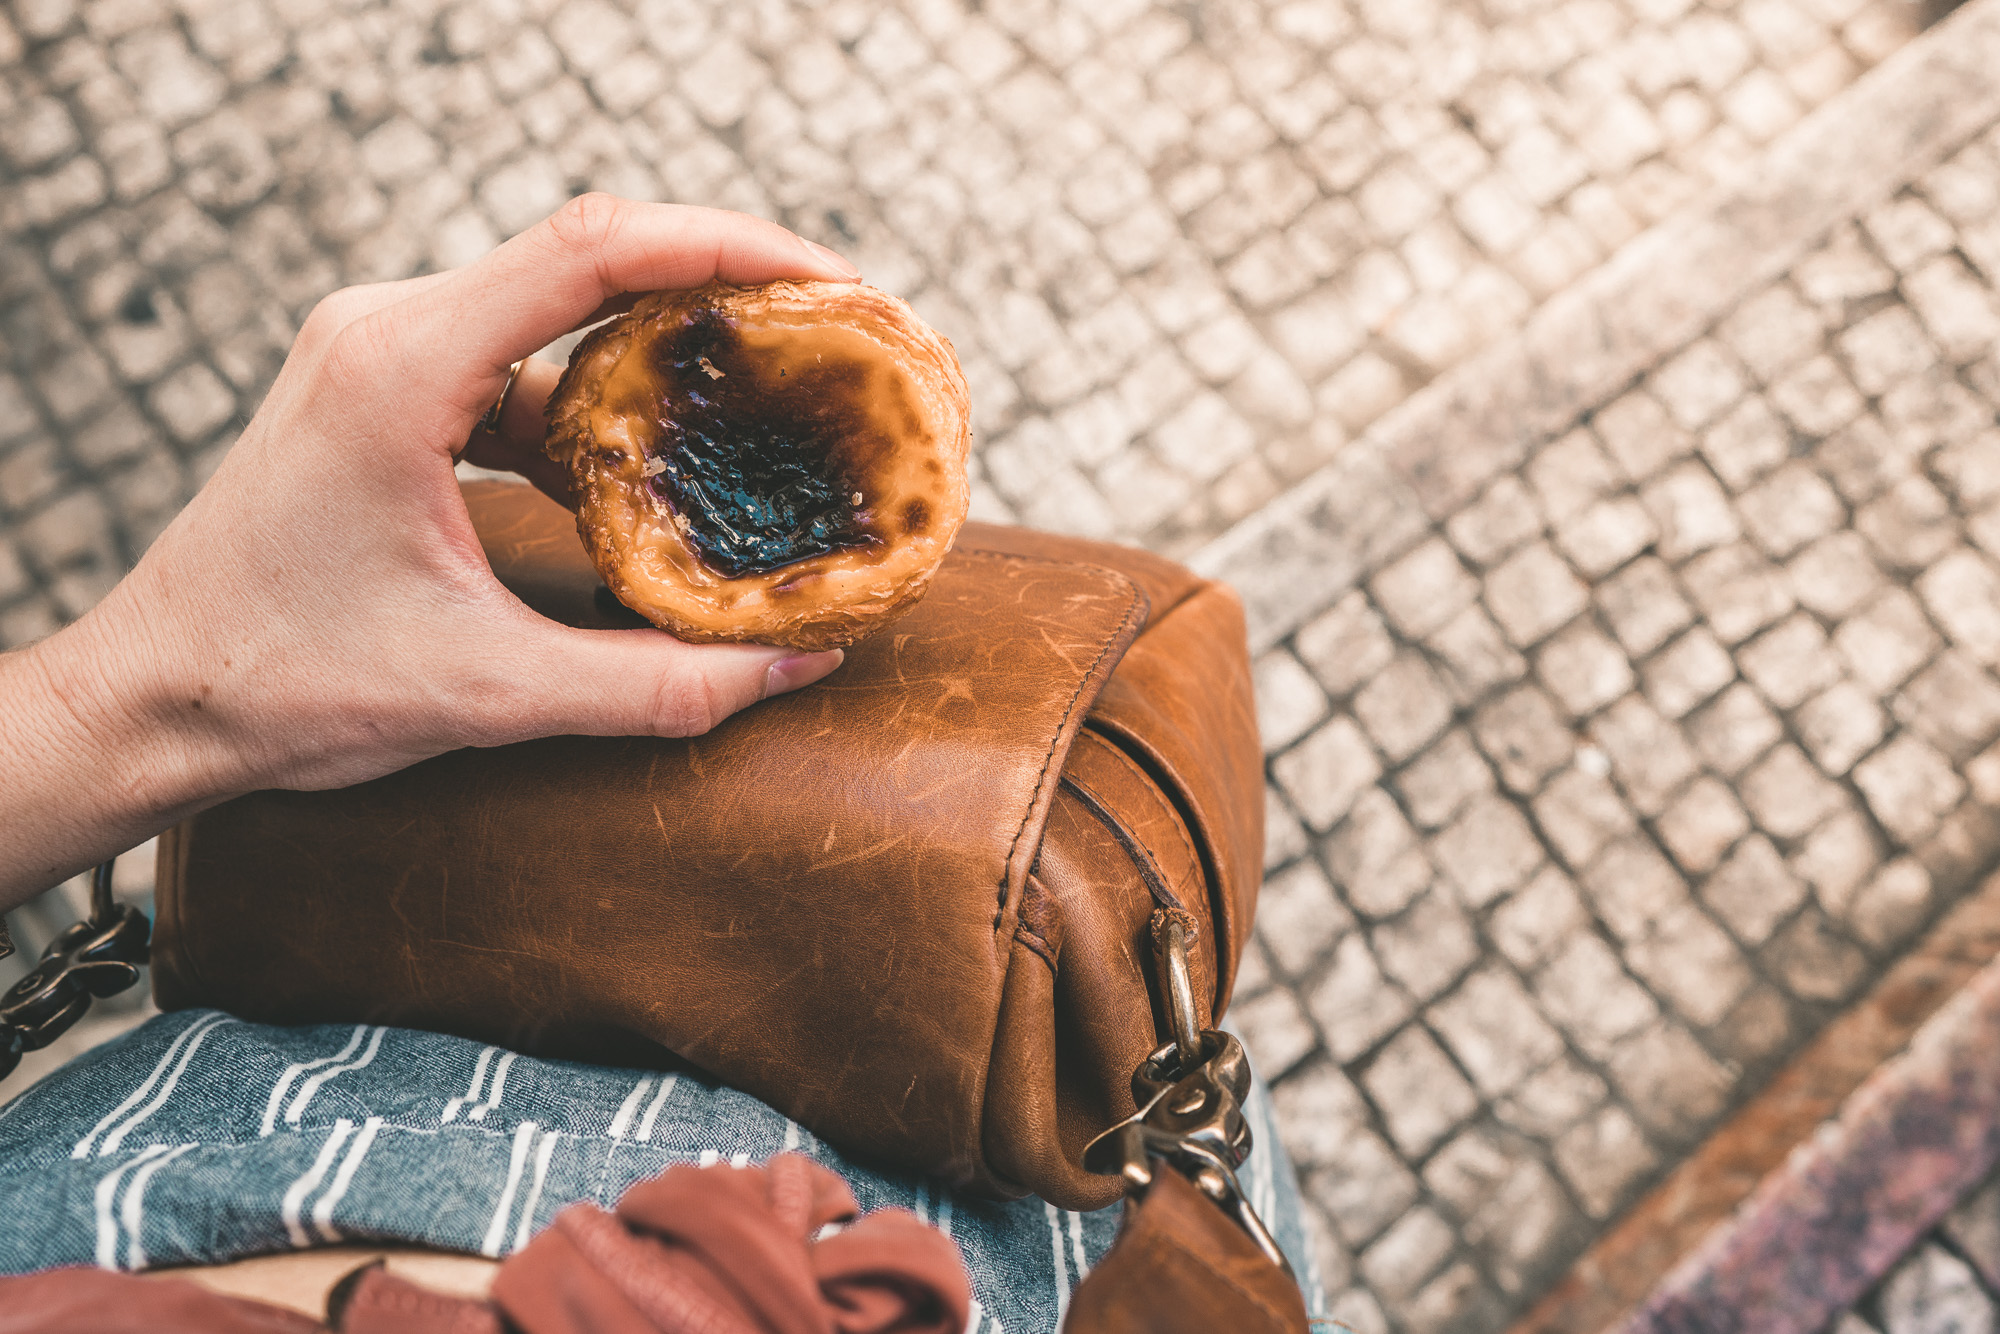 Grabbing freshly Pastel de Nata pastries in Lisbon, Portugal | Lisbon Travel Guide via Find Us Lost